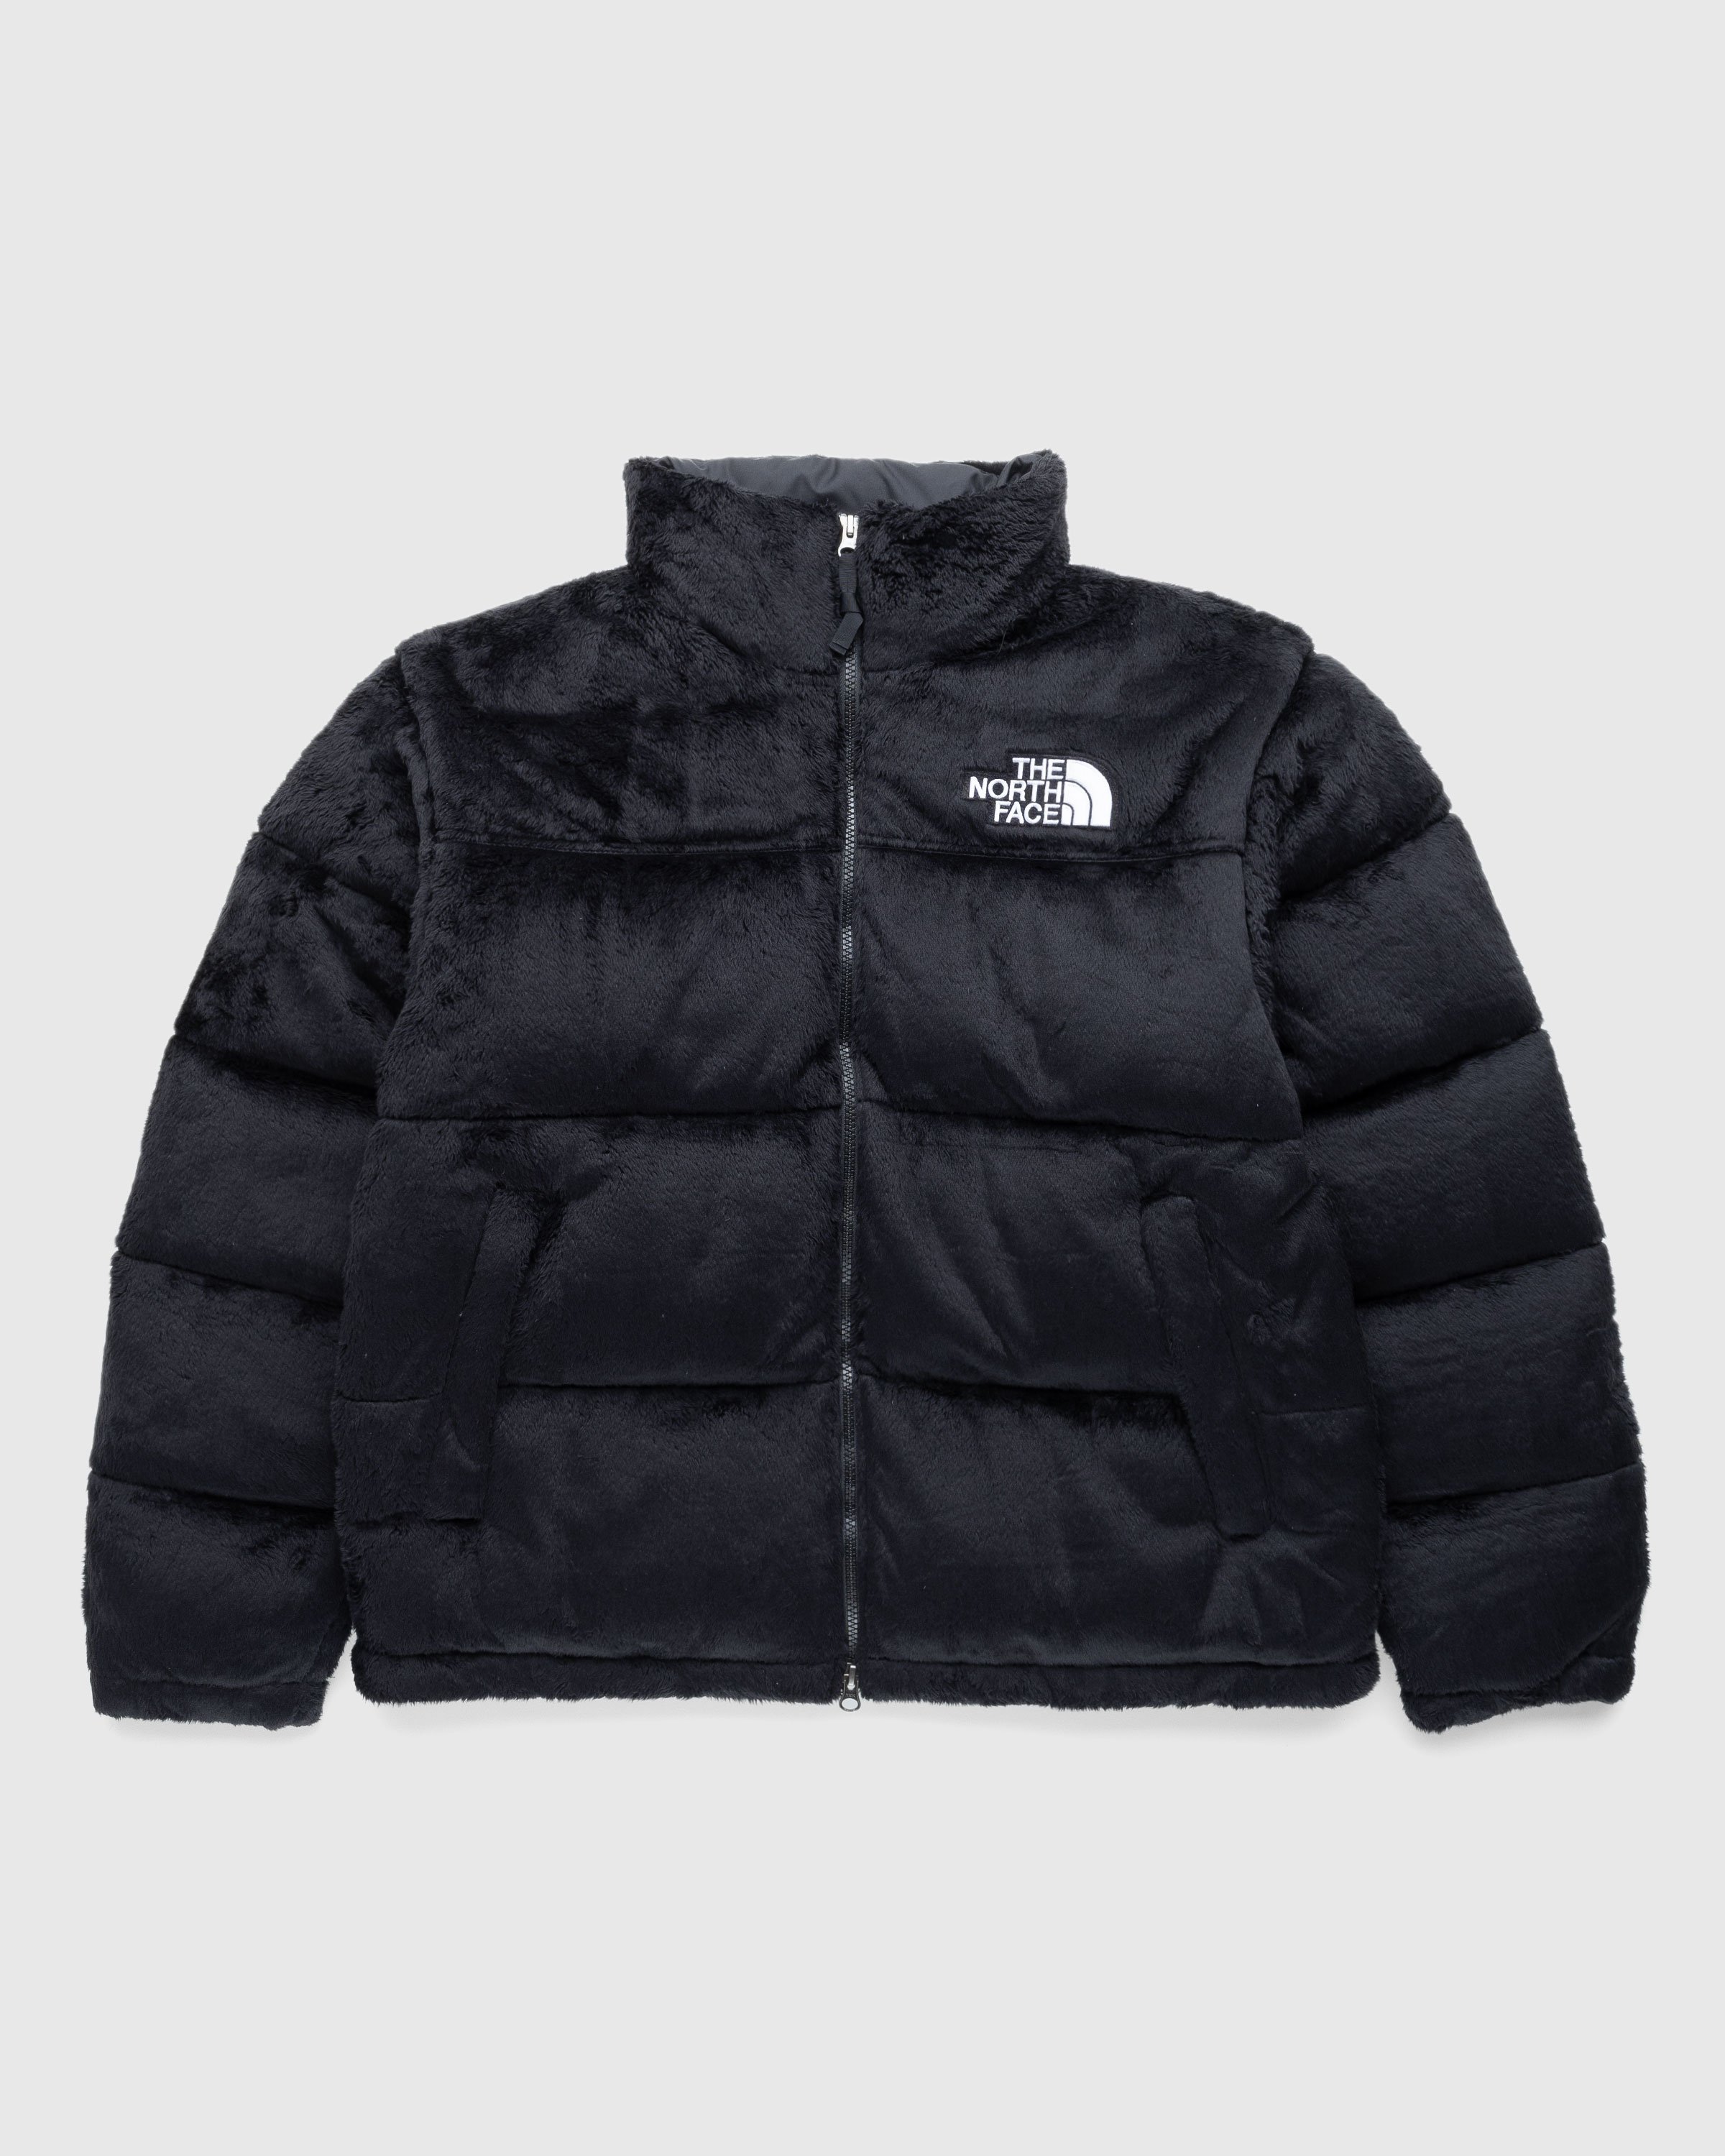 The North Face - Versa Velour Nuptse Jacket Black - Clothing - Black - Image 1